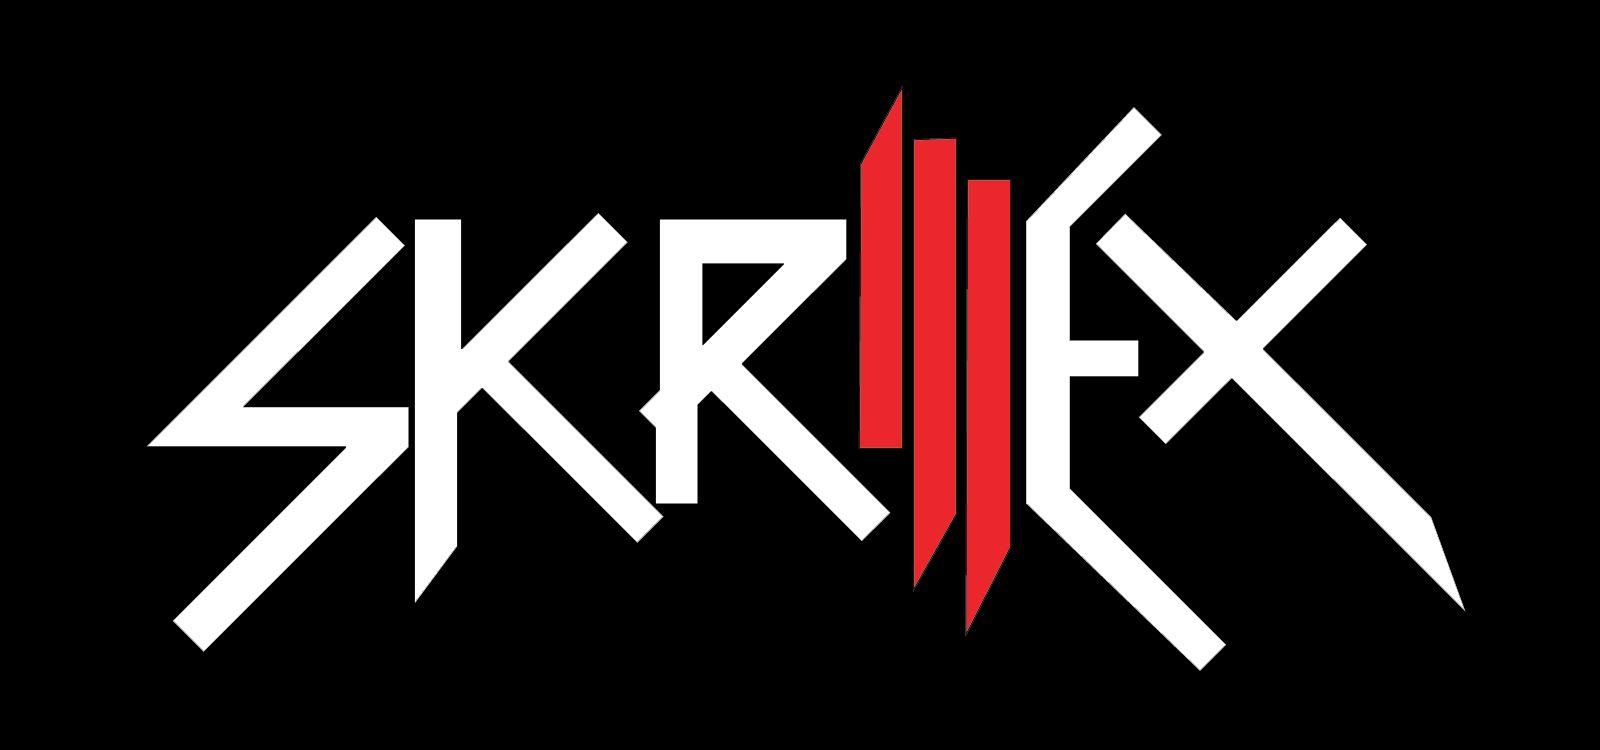 Skrillex Logo - Skrillex symbol. All logos world. Skrillex, Dubstep, Music